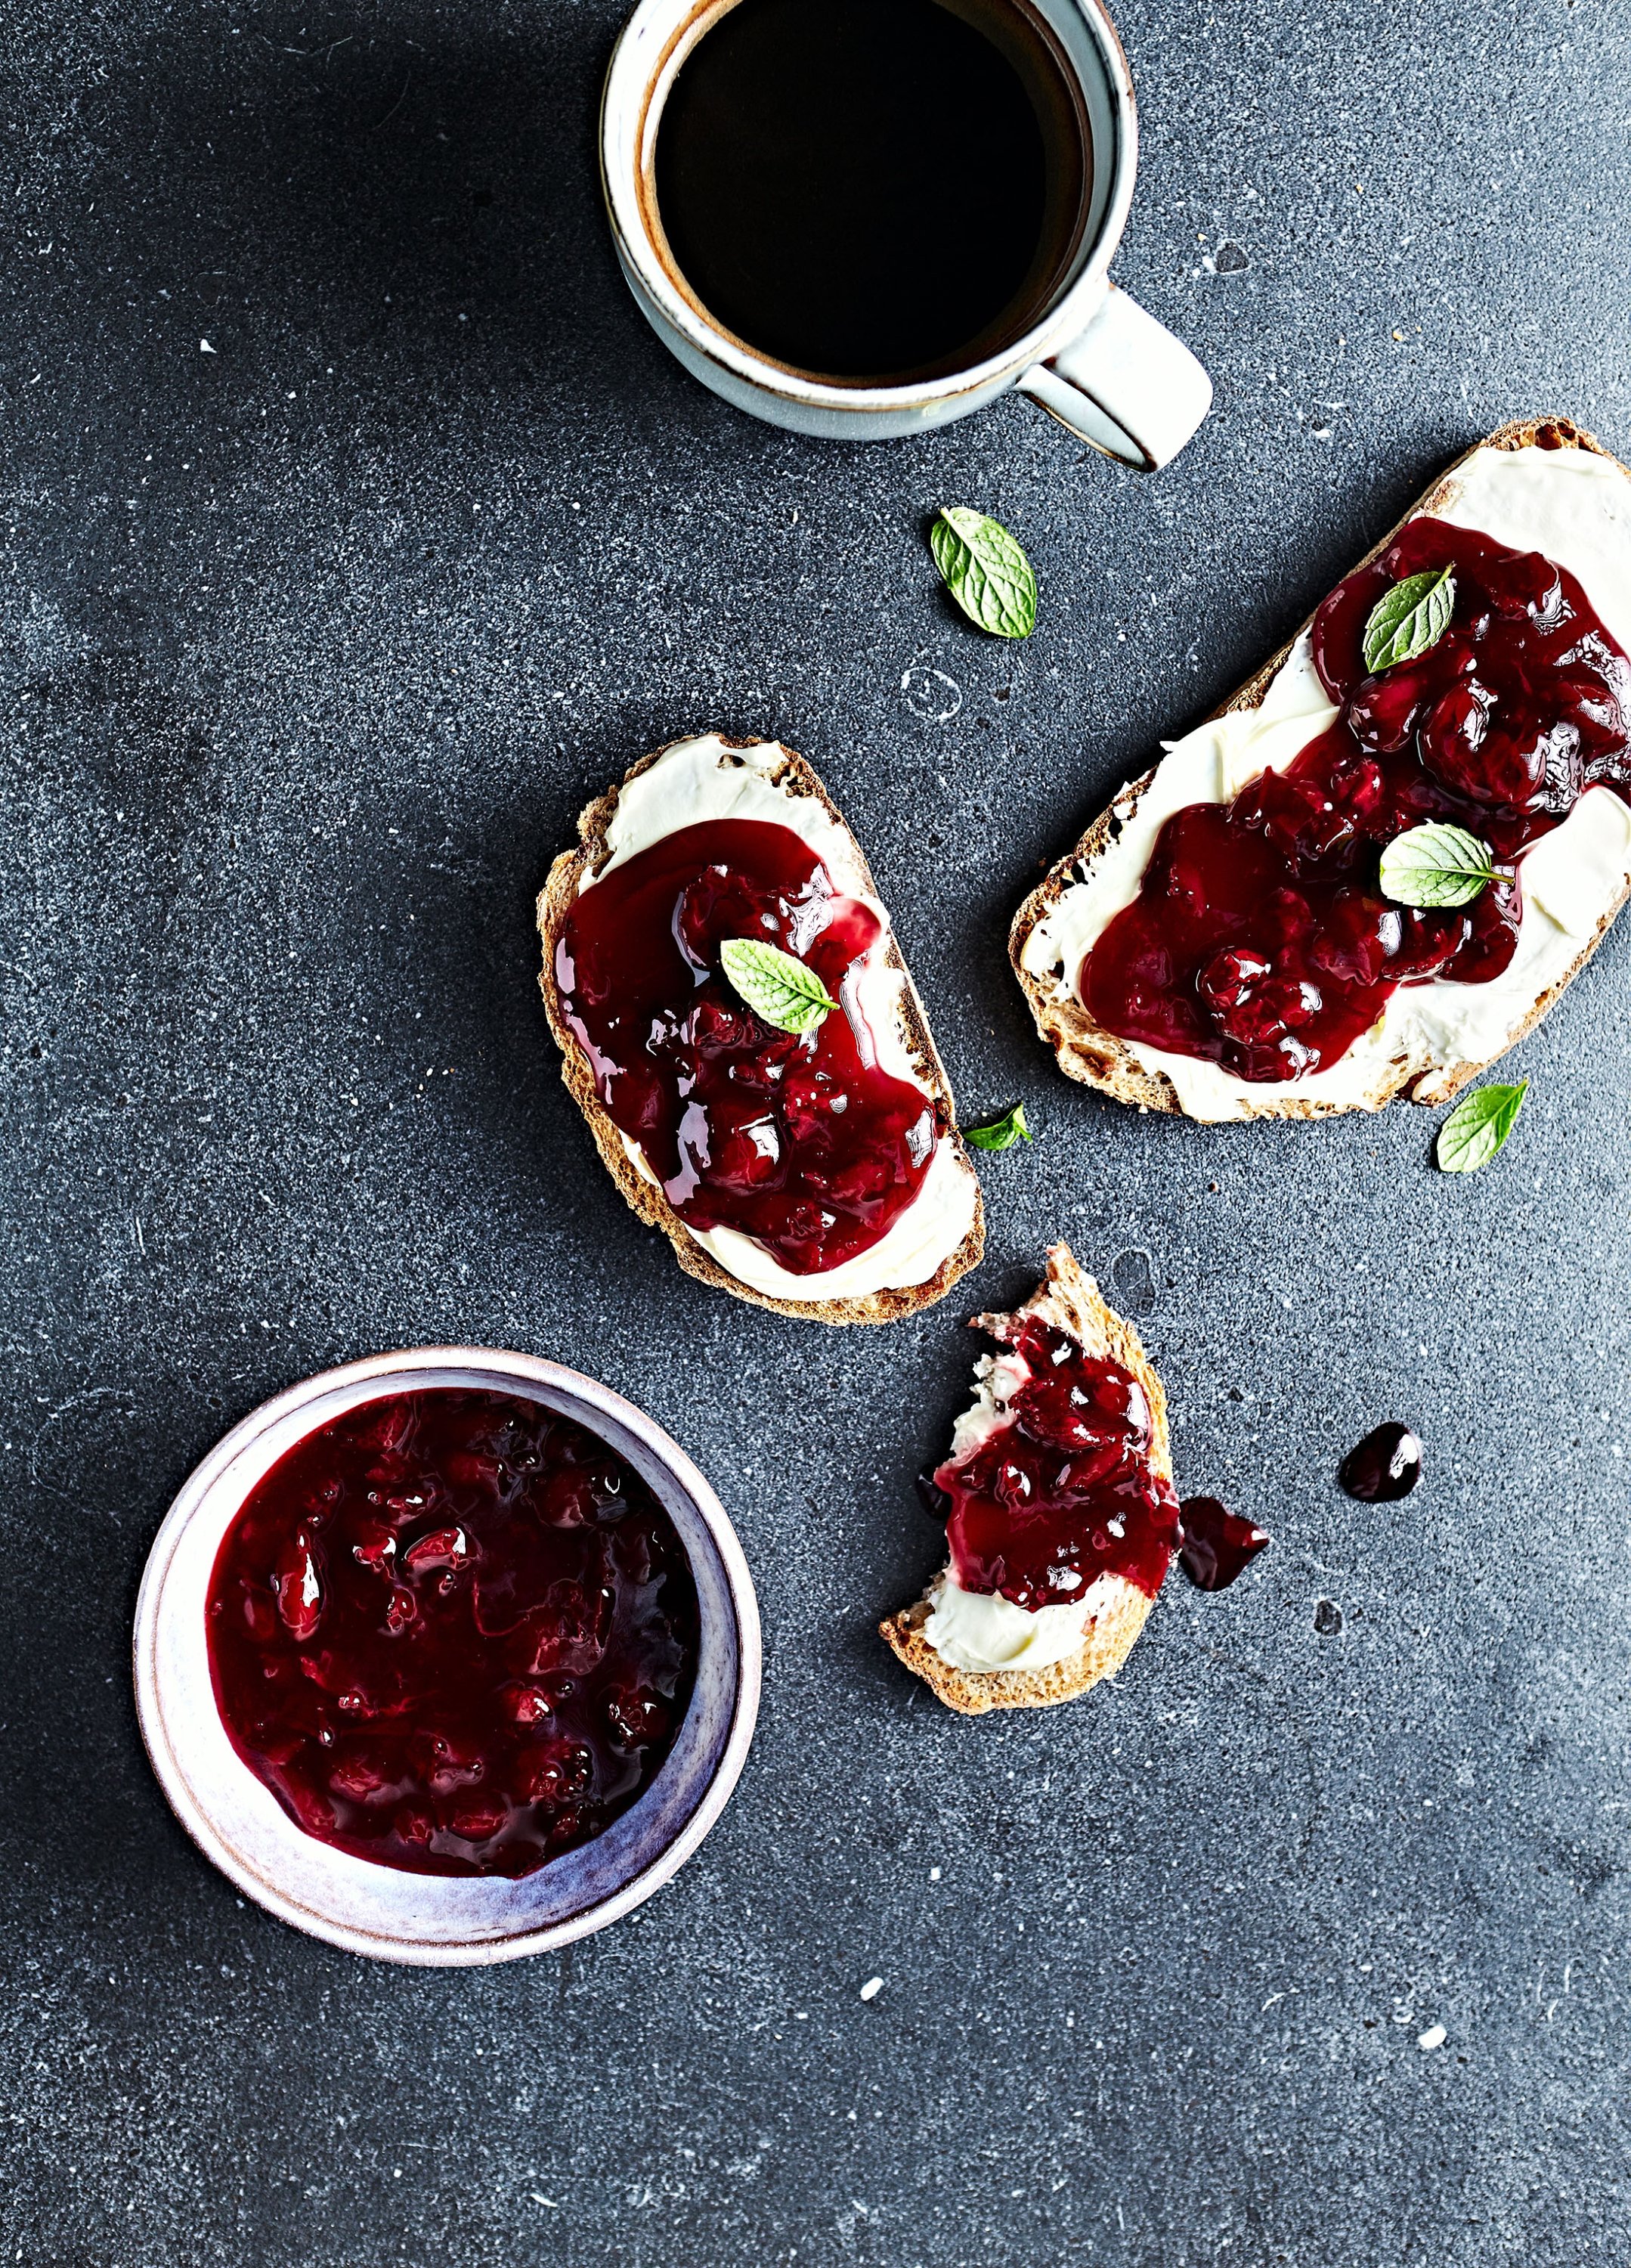 Cherry jam and cream cheese make for a heavenly breakfast pairing. (Shutterstock Photo)